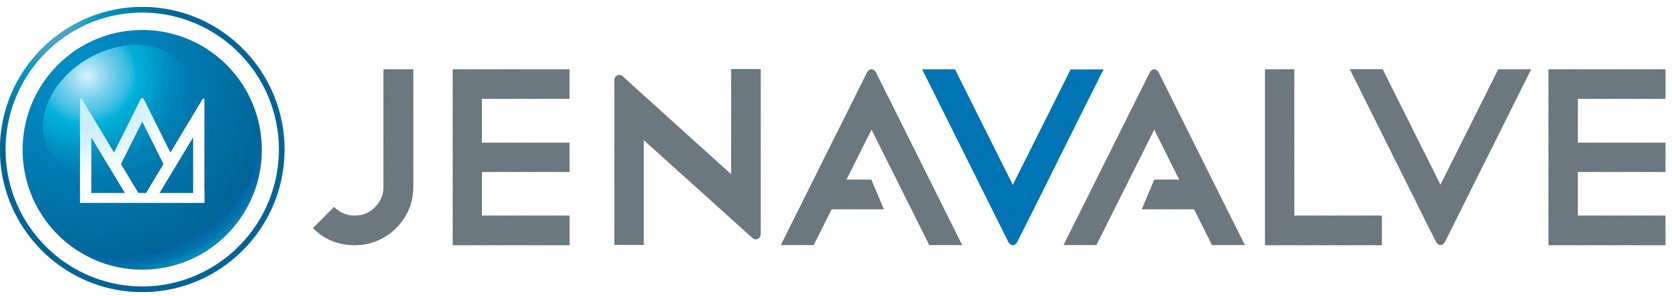 JenaValve Logo.jpg